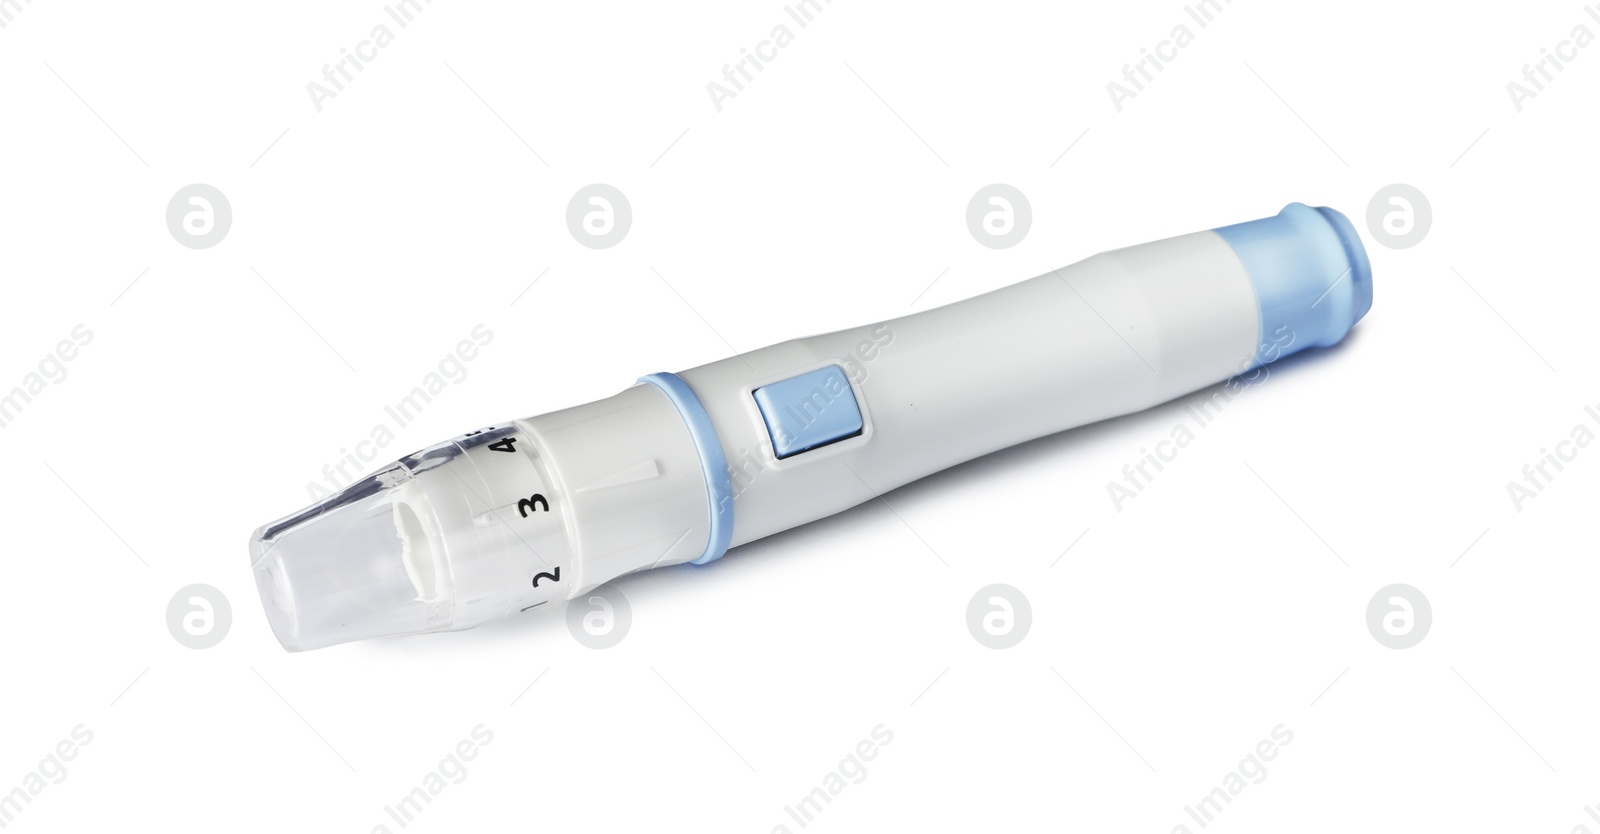 Photo of Blood lancet pen on white background. Medical device